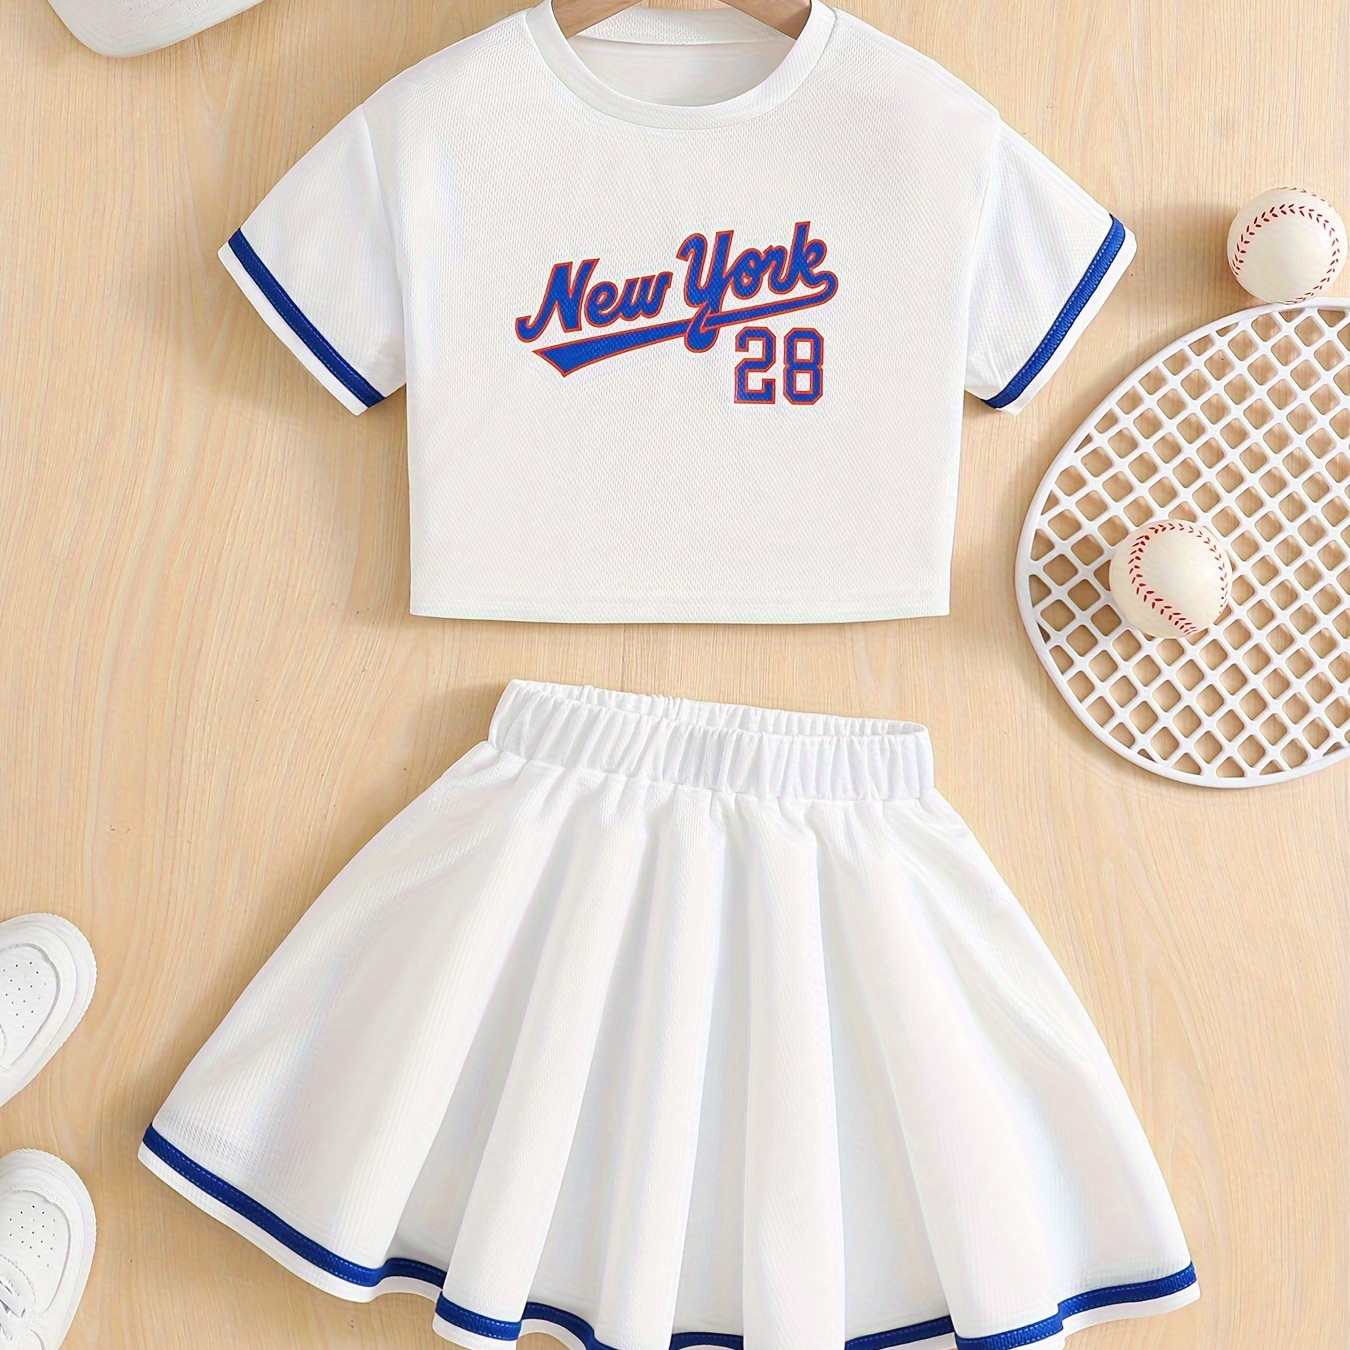 

Girl's Tennis Sports Suit 2pcs, New York Print Short Sleeve Tee + Skirt Set Trendy 2-piece Summer Outfit